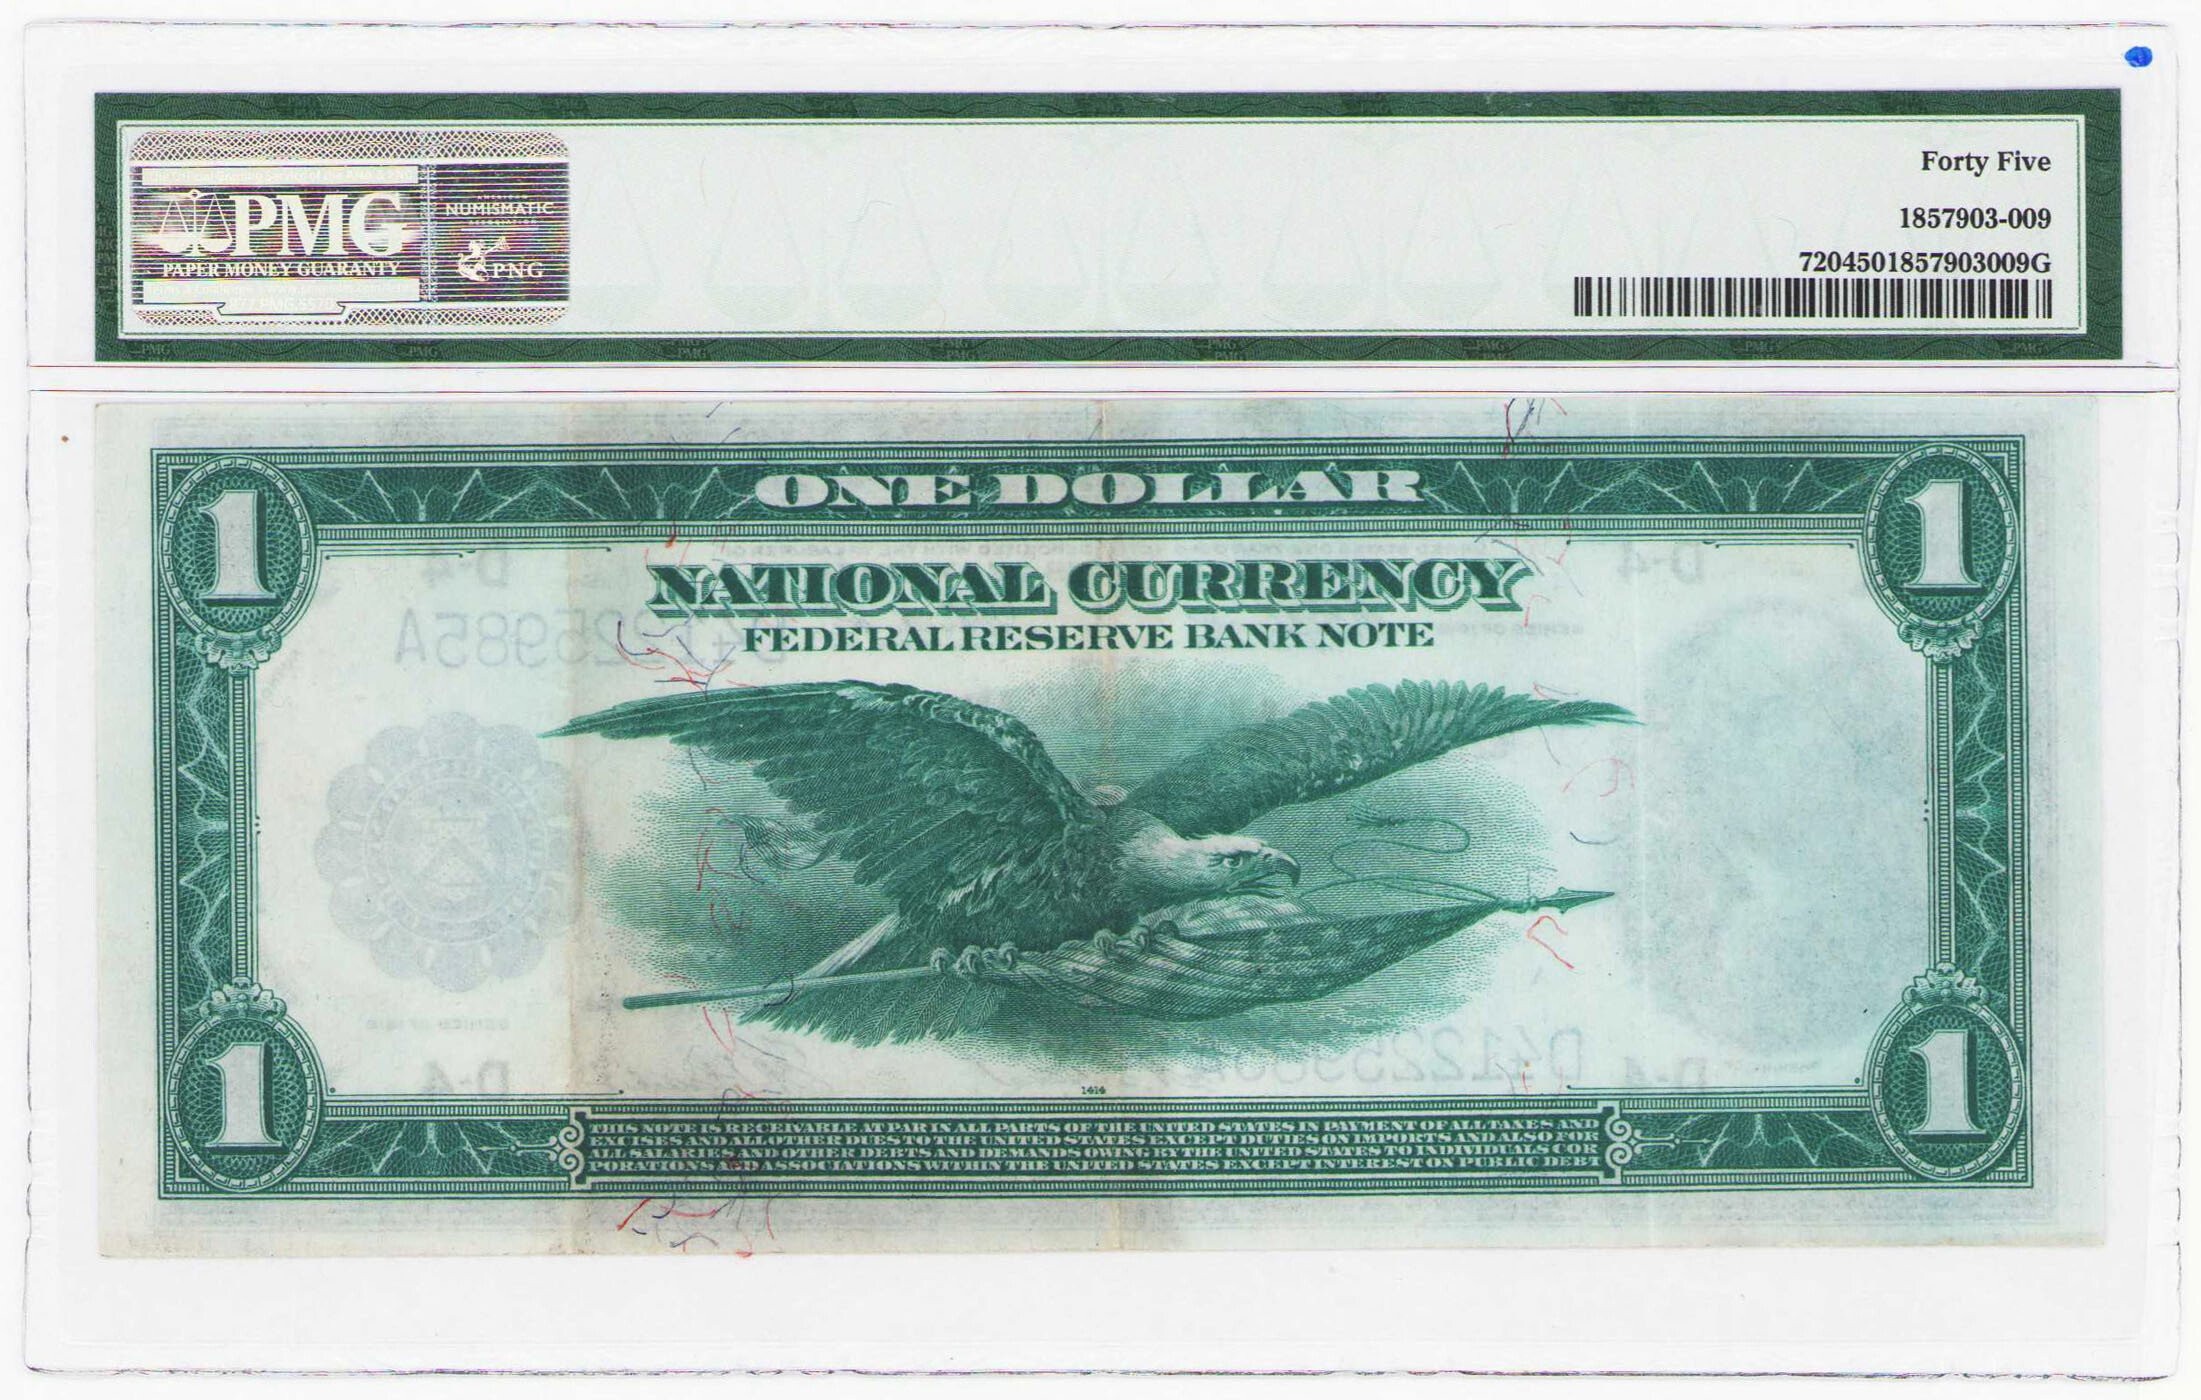 Bank Polska Kasa Opieki 1 dolar dollar BFX1027a,PFX27 1